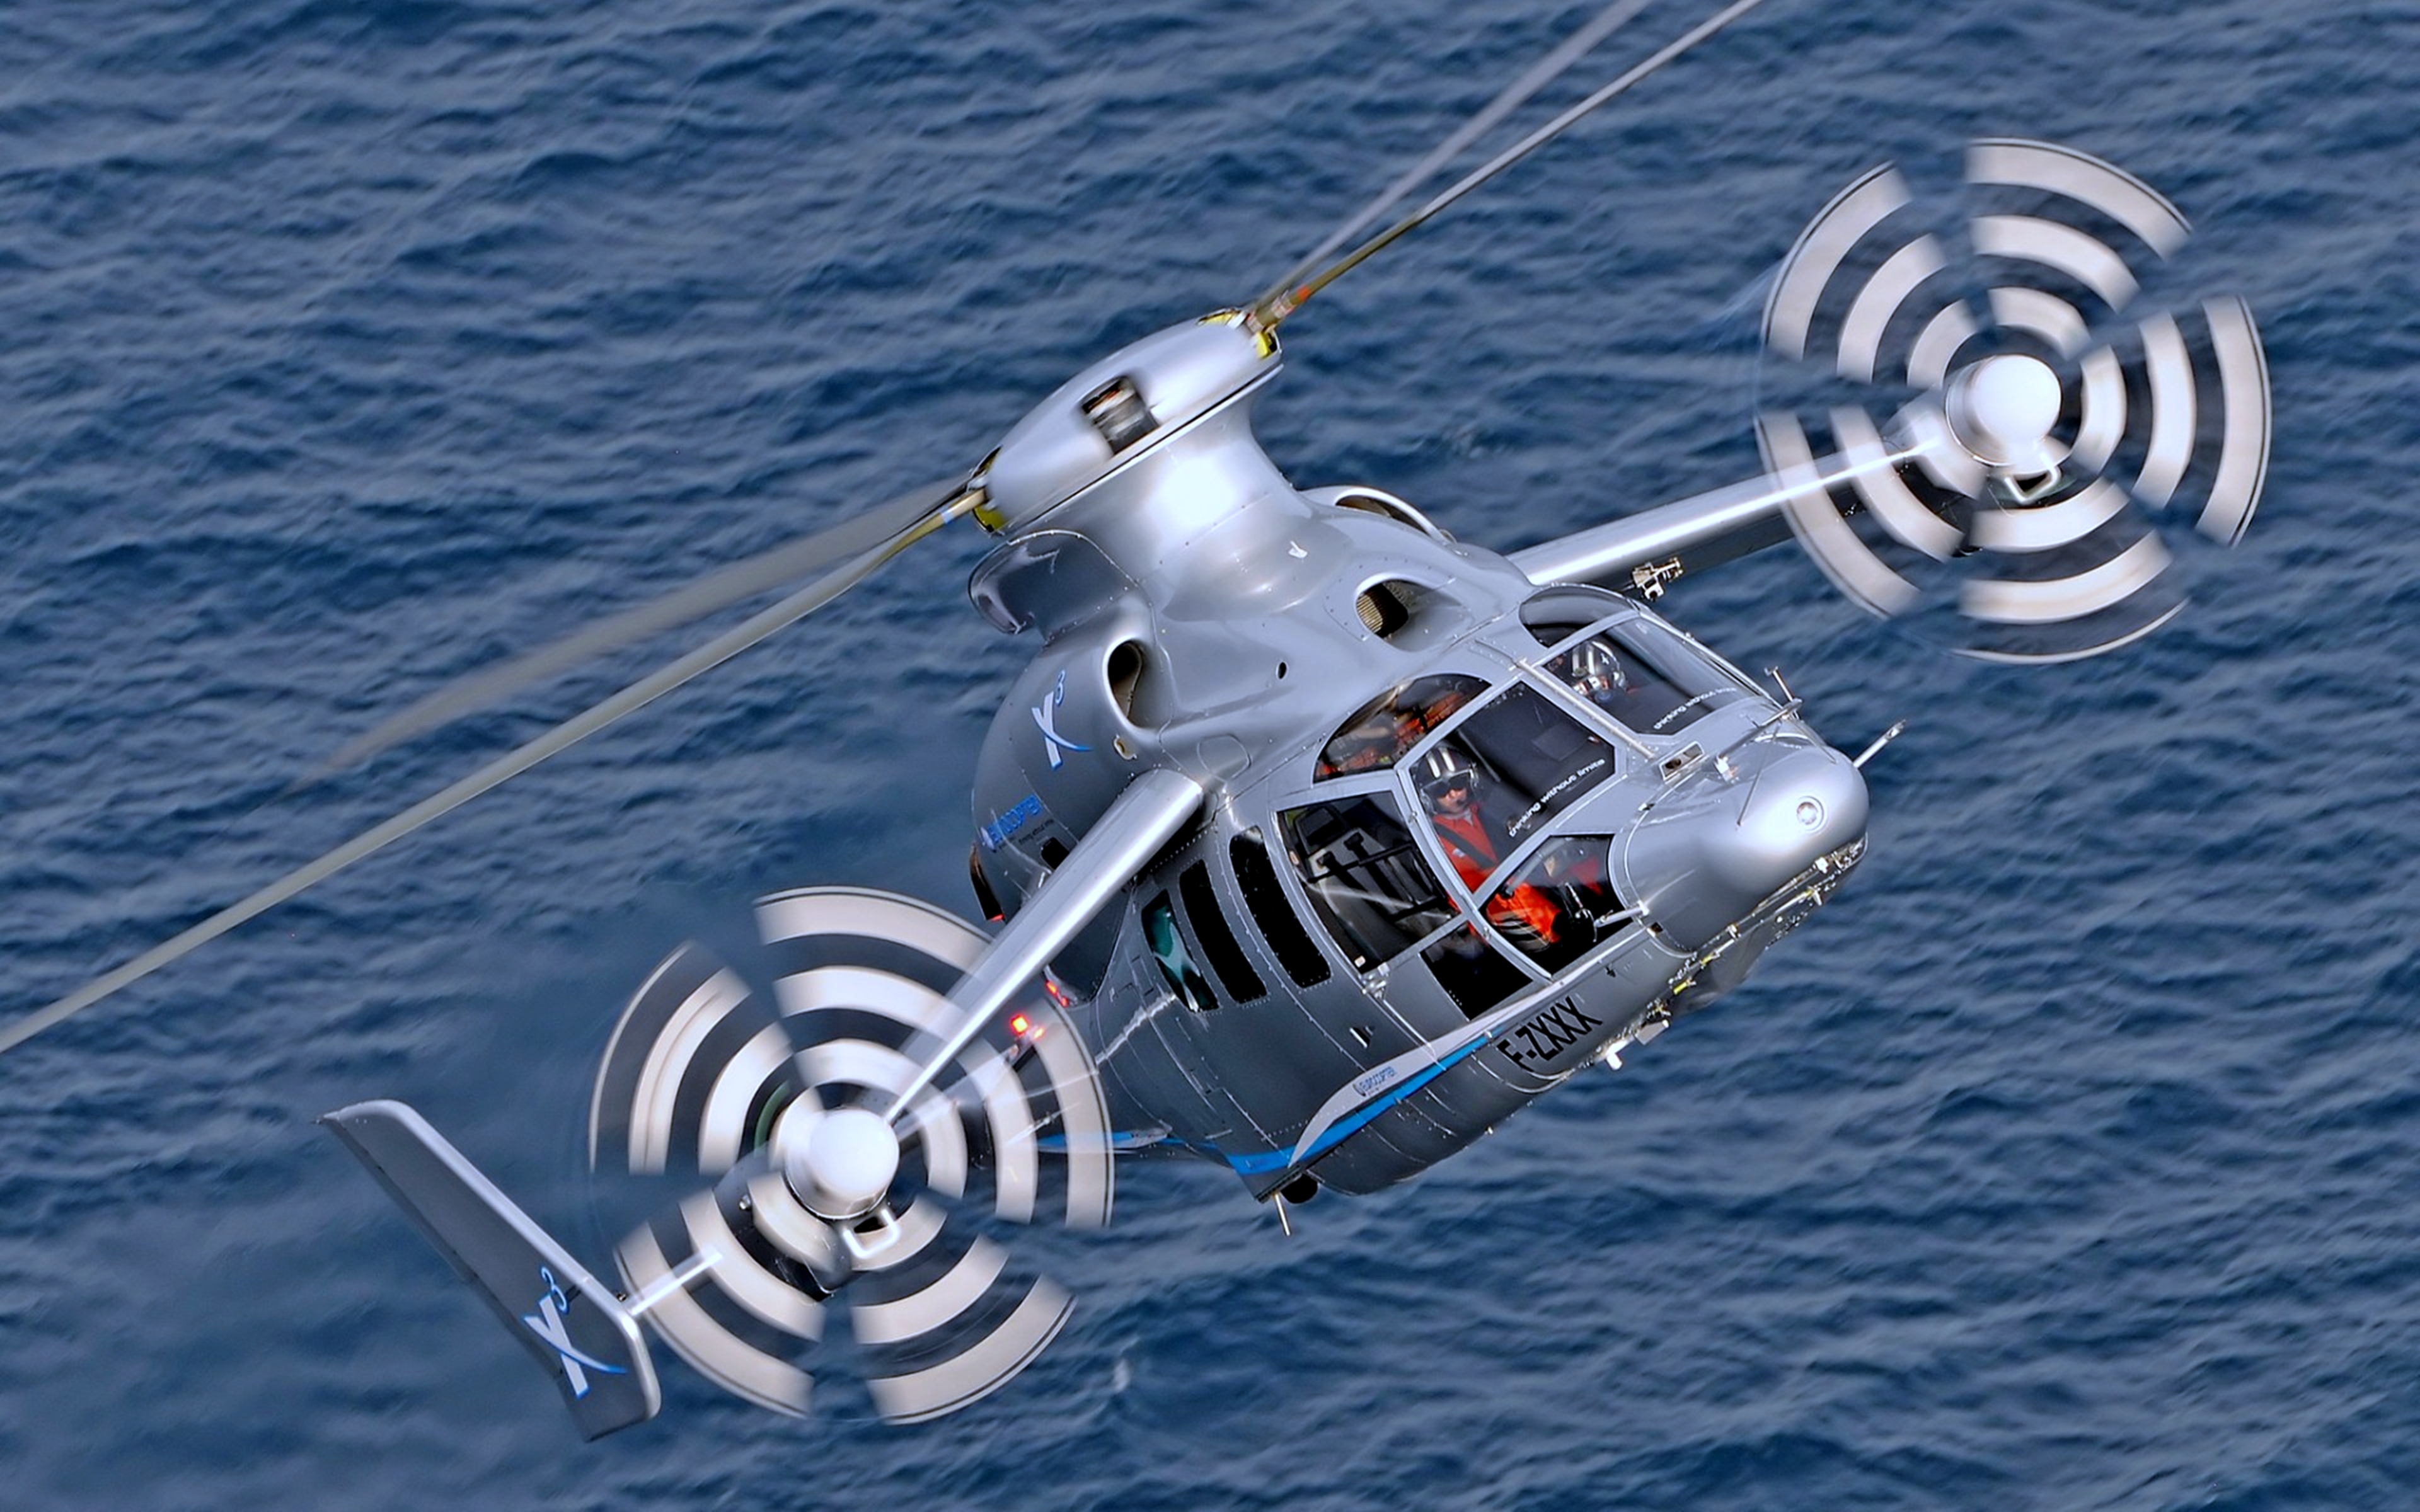 356878 baixar imagens veículos, eurocopter x3, aeronaves, eurocopter, helicóptero, mar, aeronave - papéis de parede e protetores de tela gratuitamente